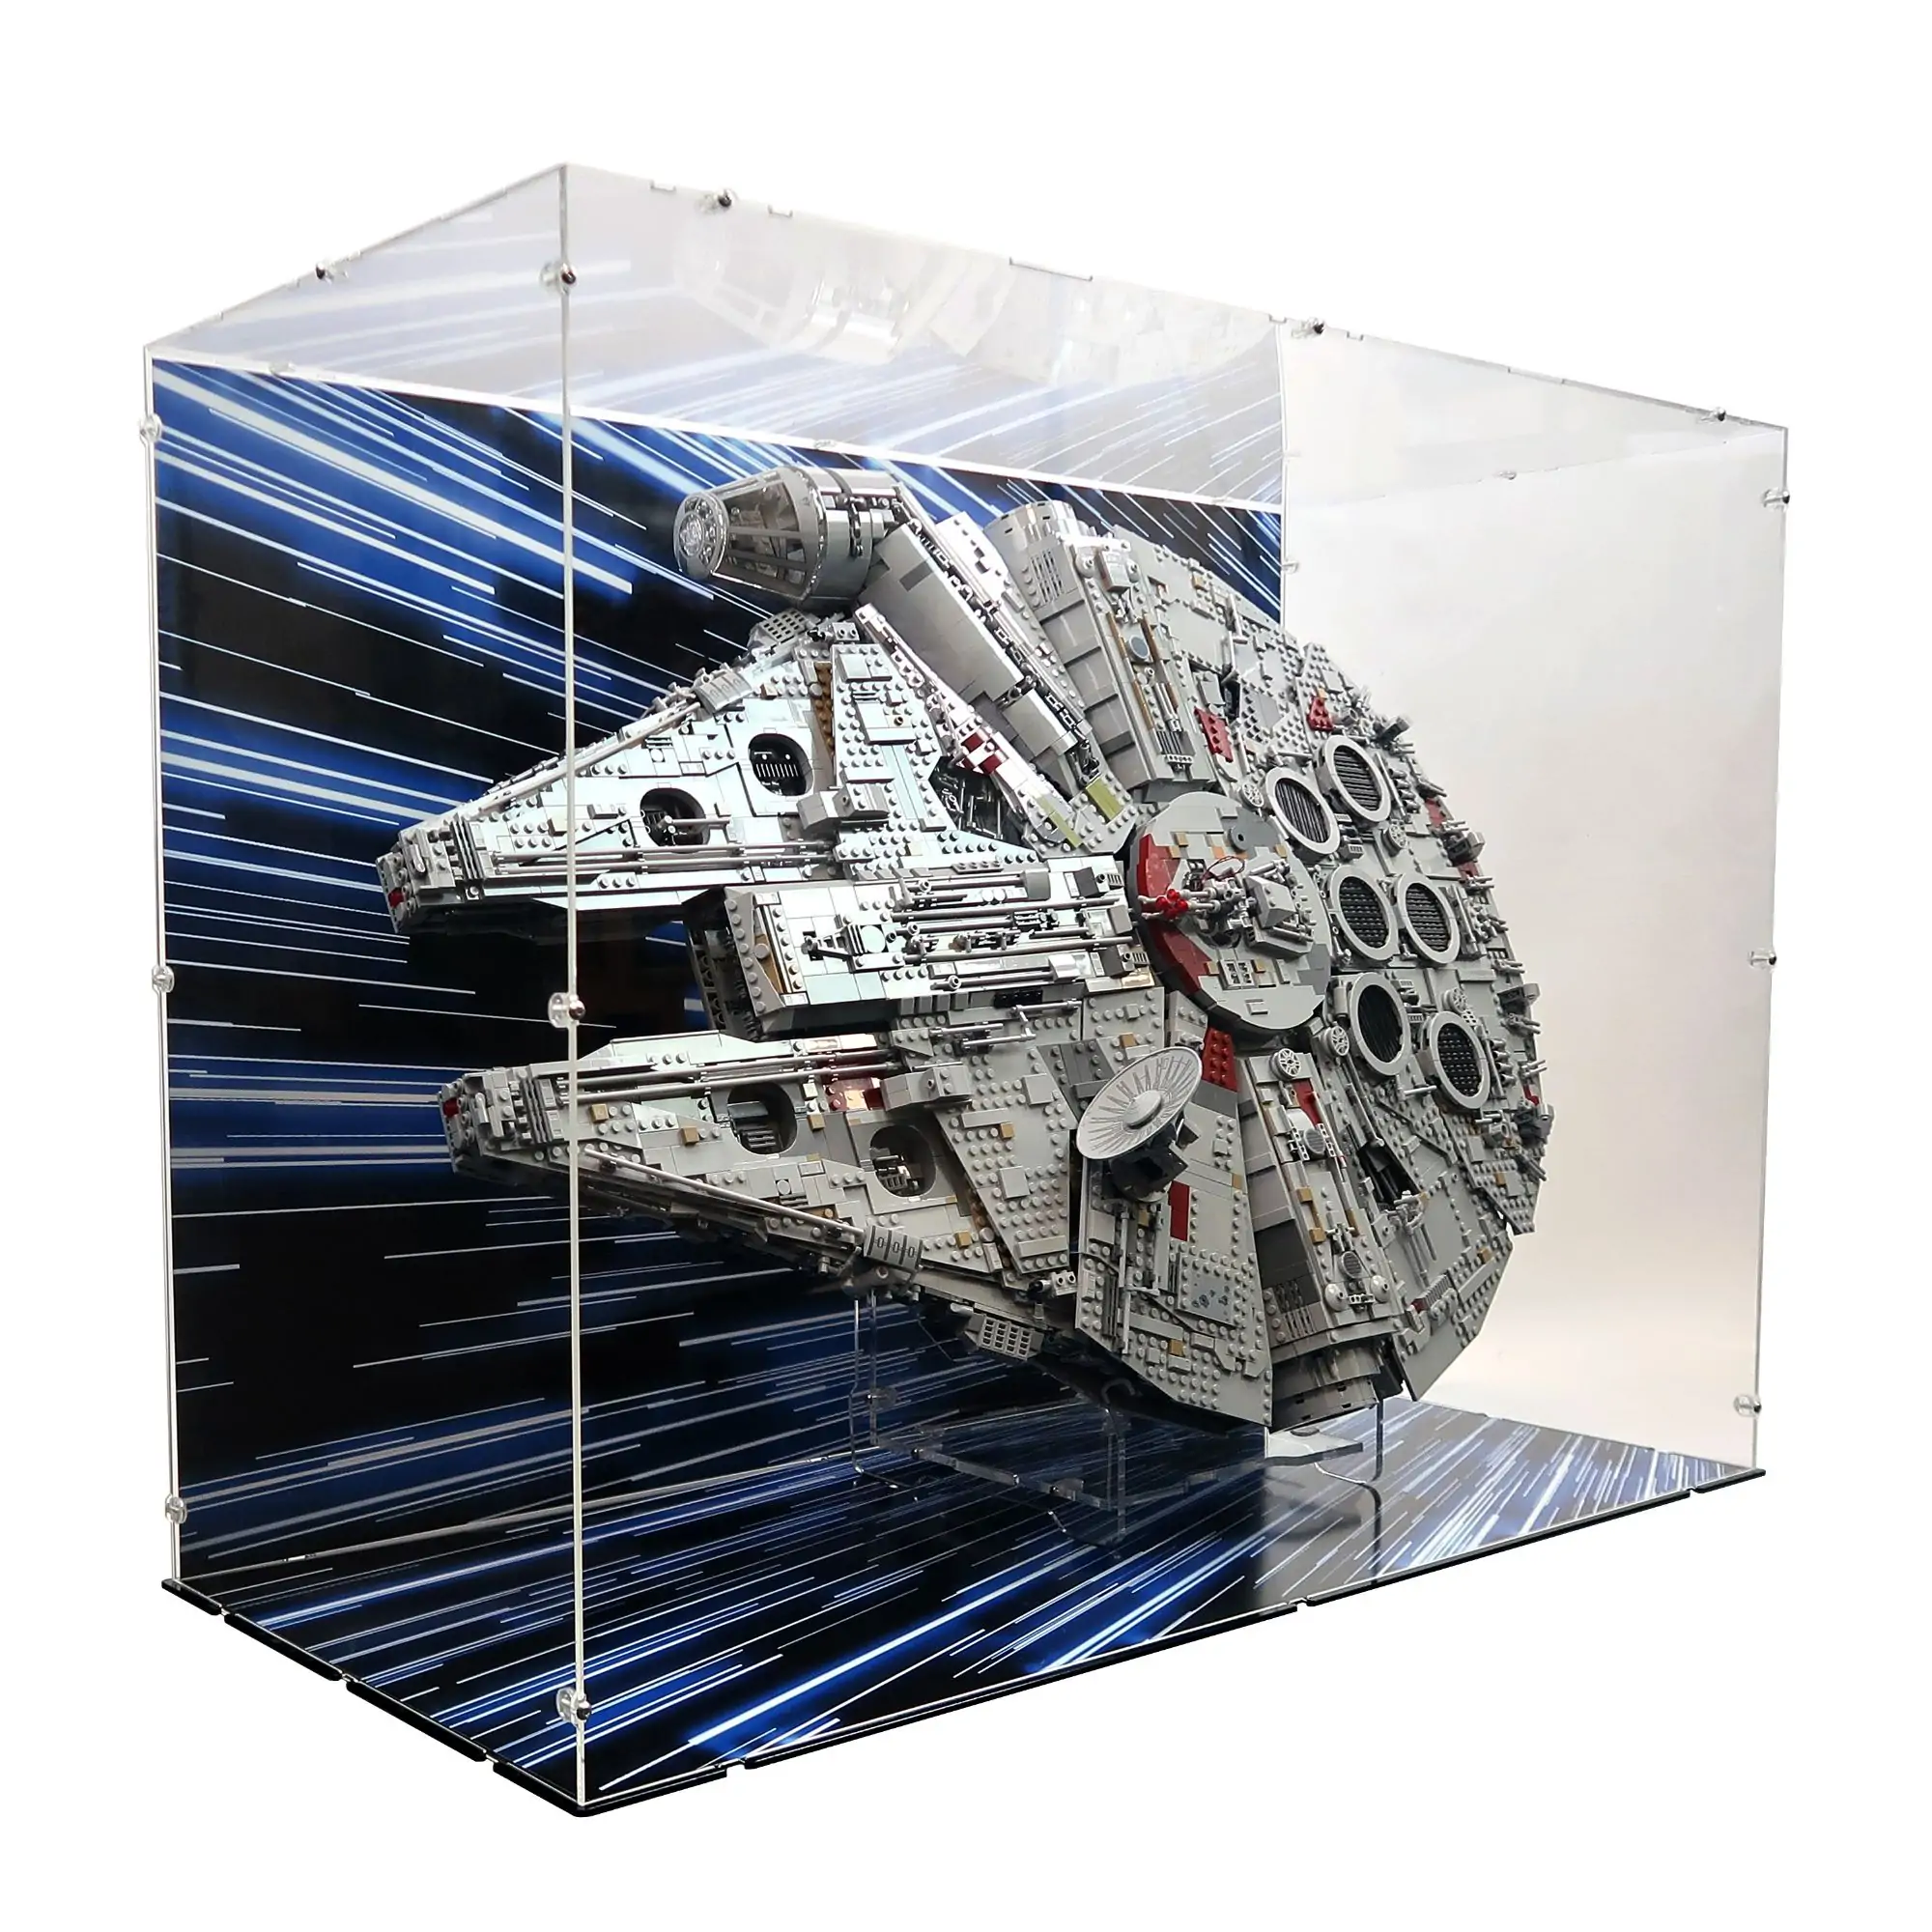 LEGO Millennium Falcon Set 75192